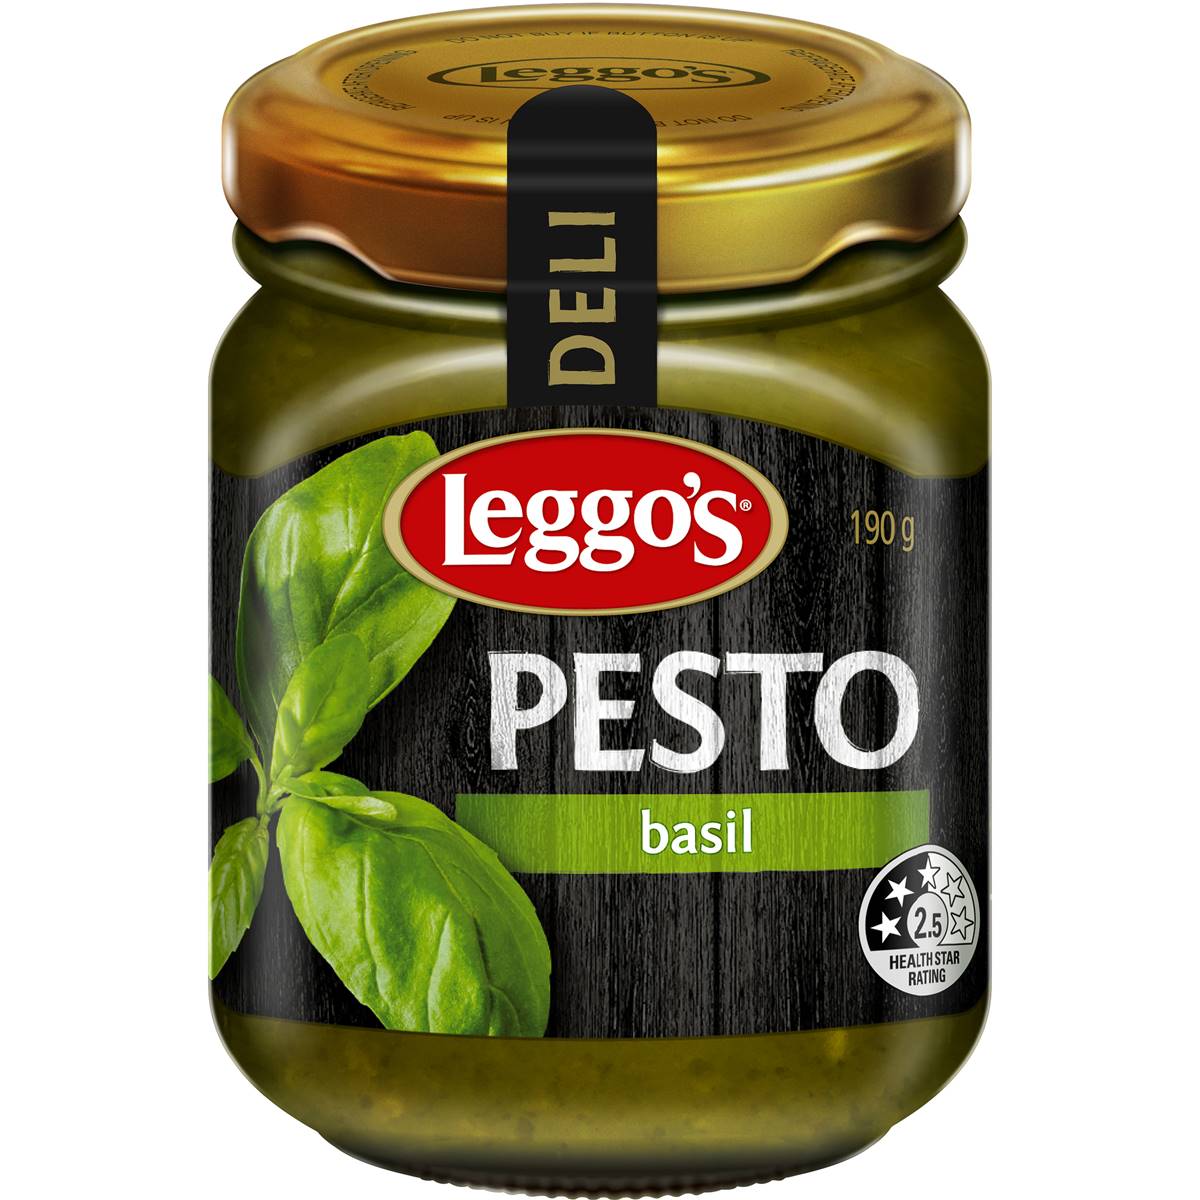 Leggos Pesto Basil 190g